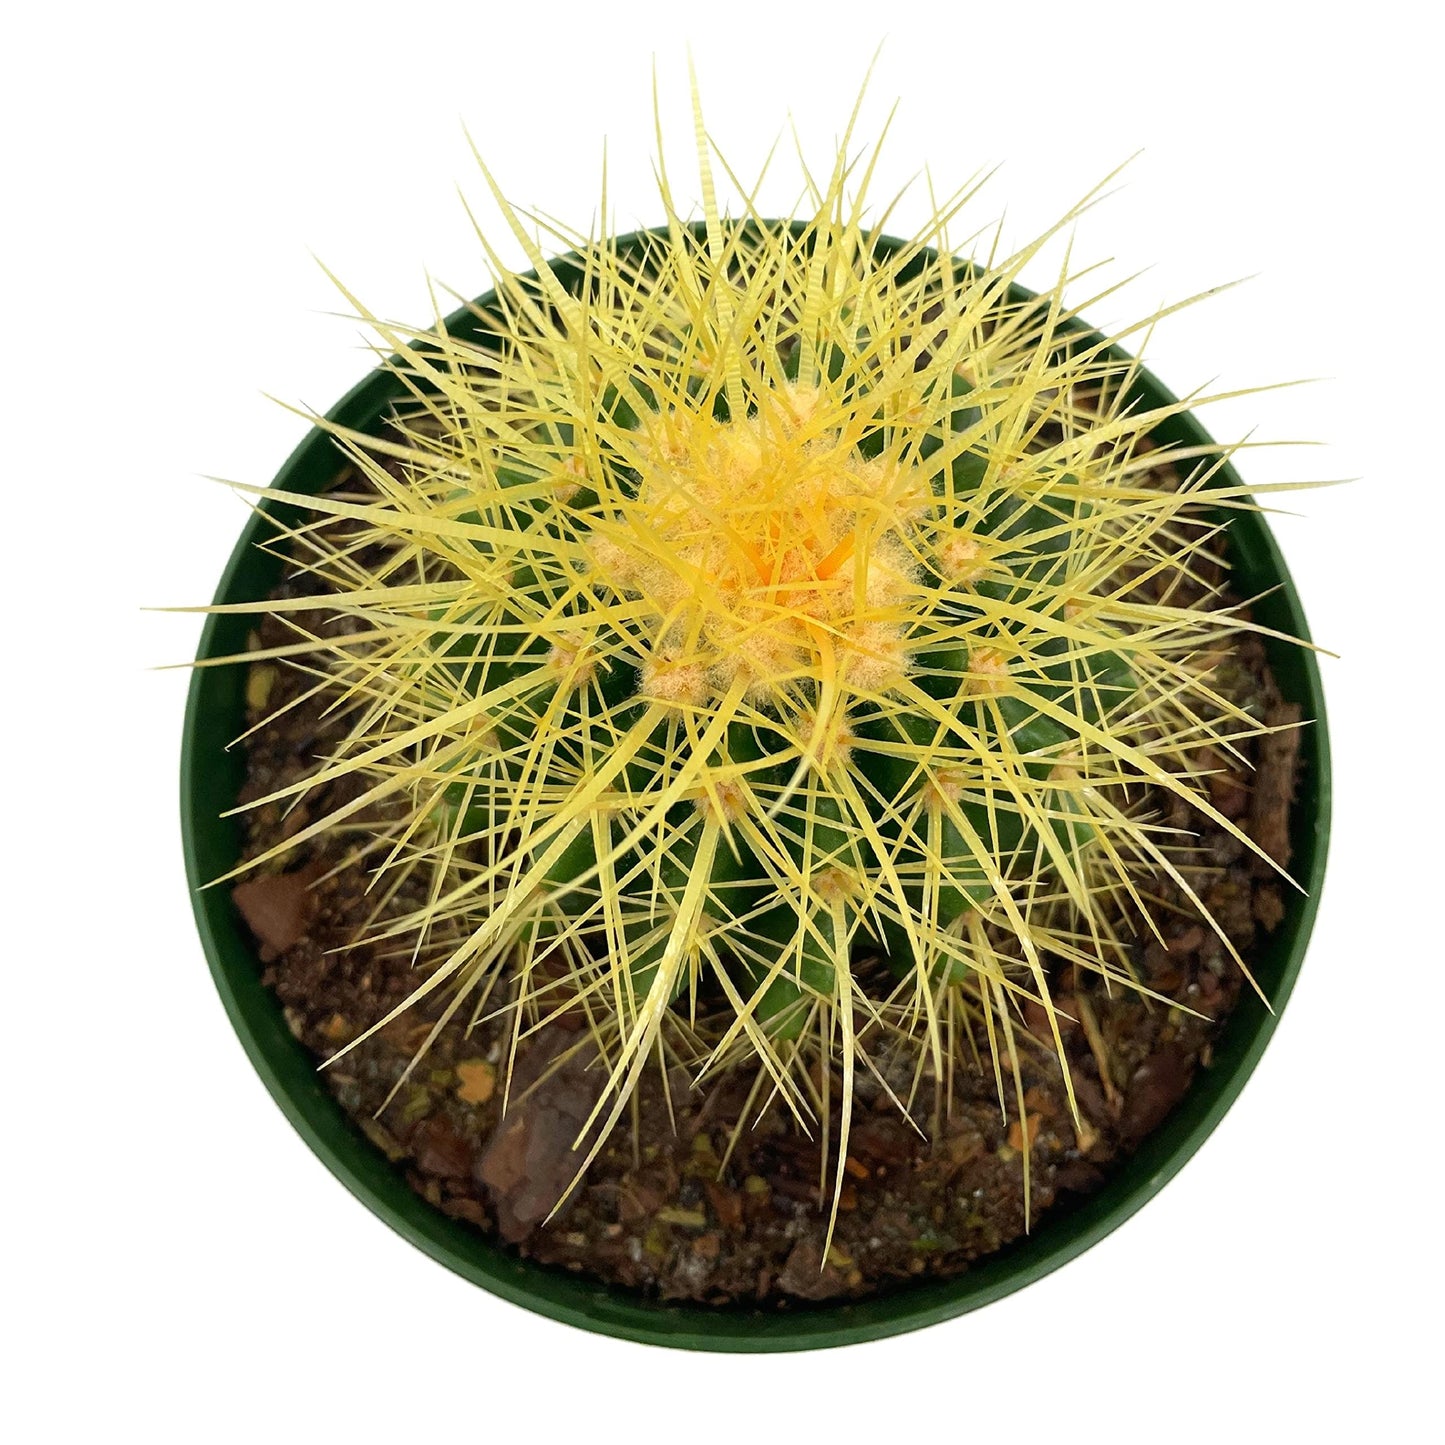 Golden Barrel Cactus, 6 inch, Echinocactus Grusonii, Gold Ball Cacti